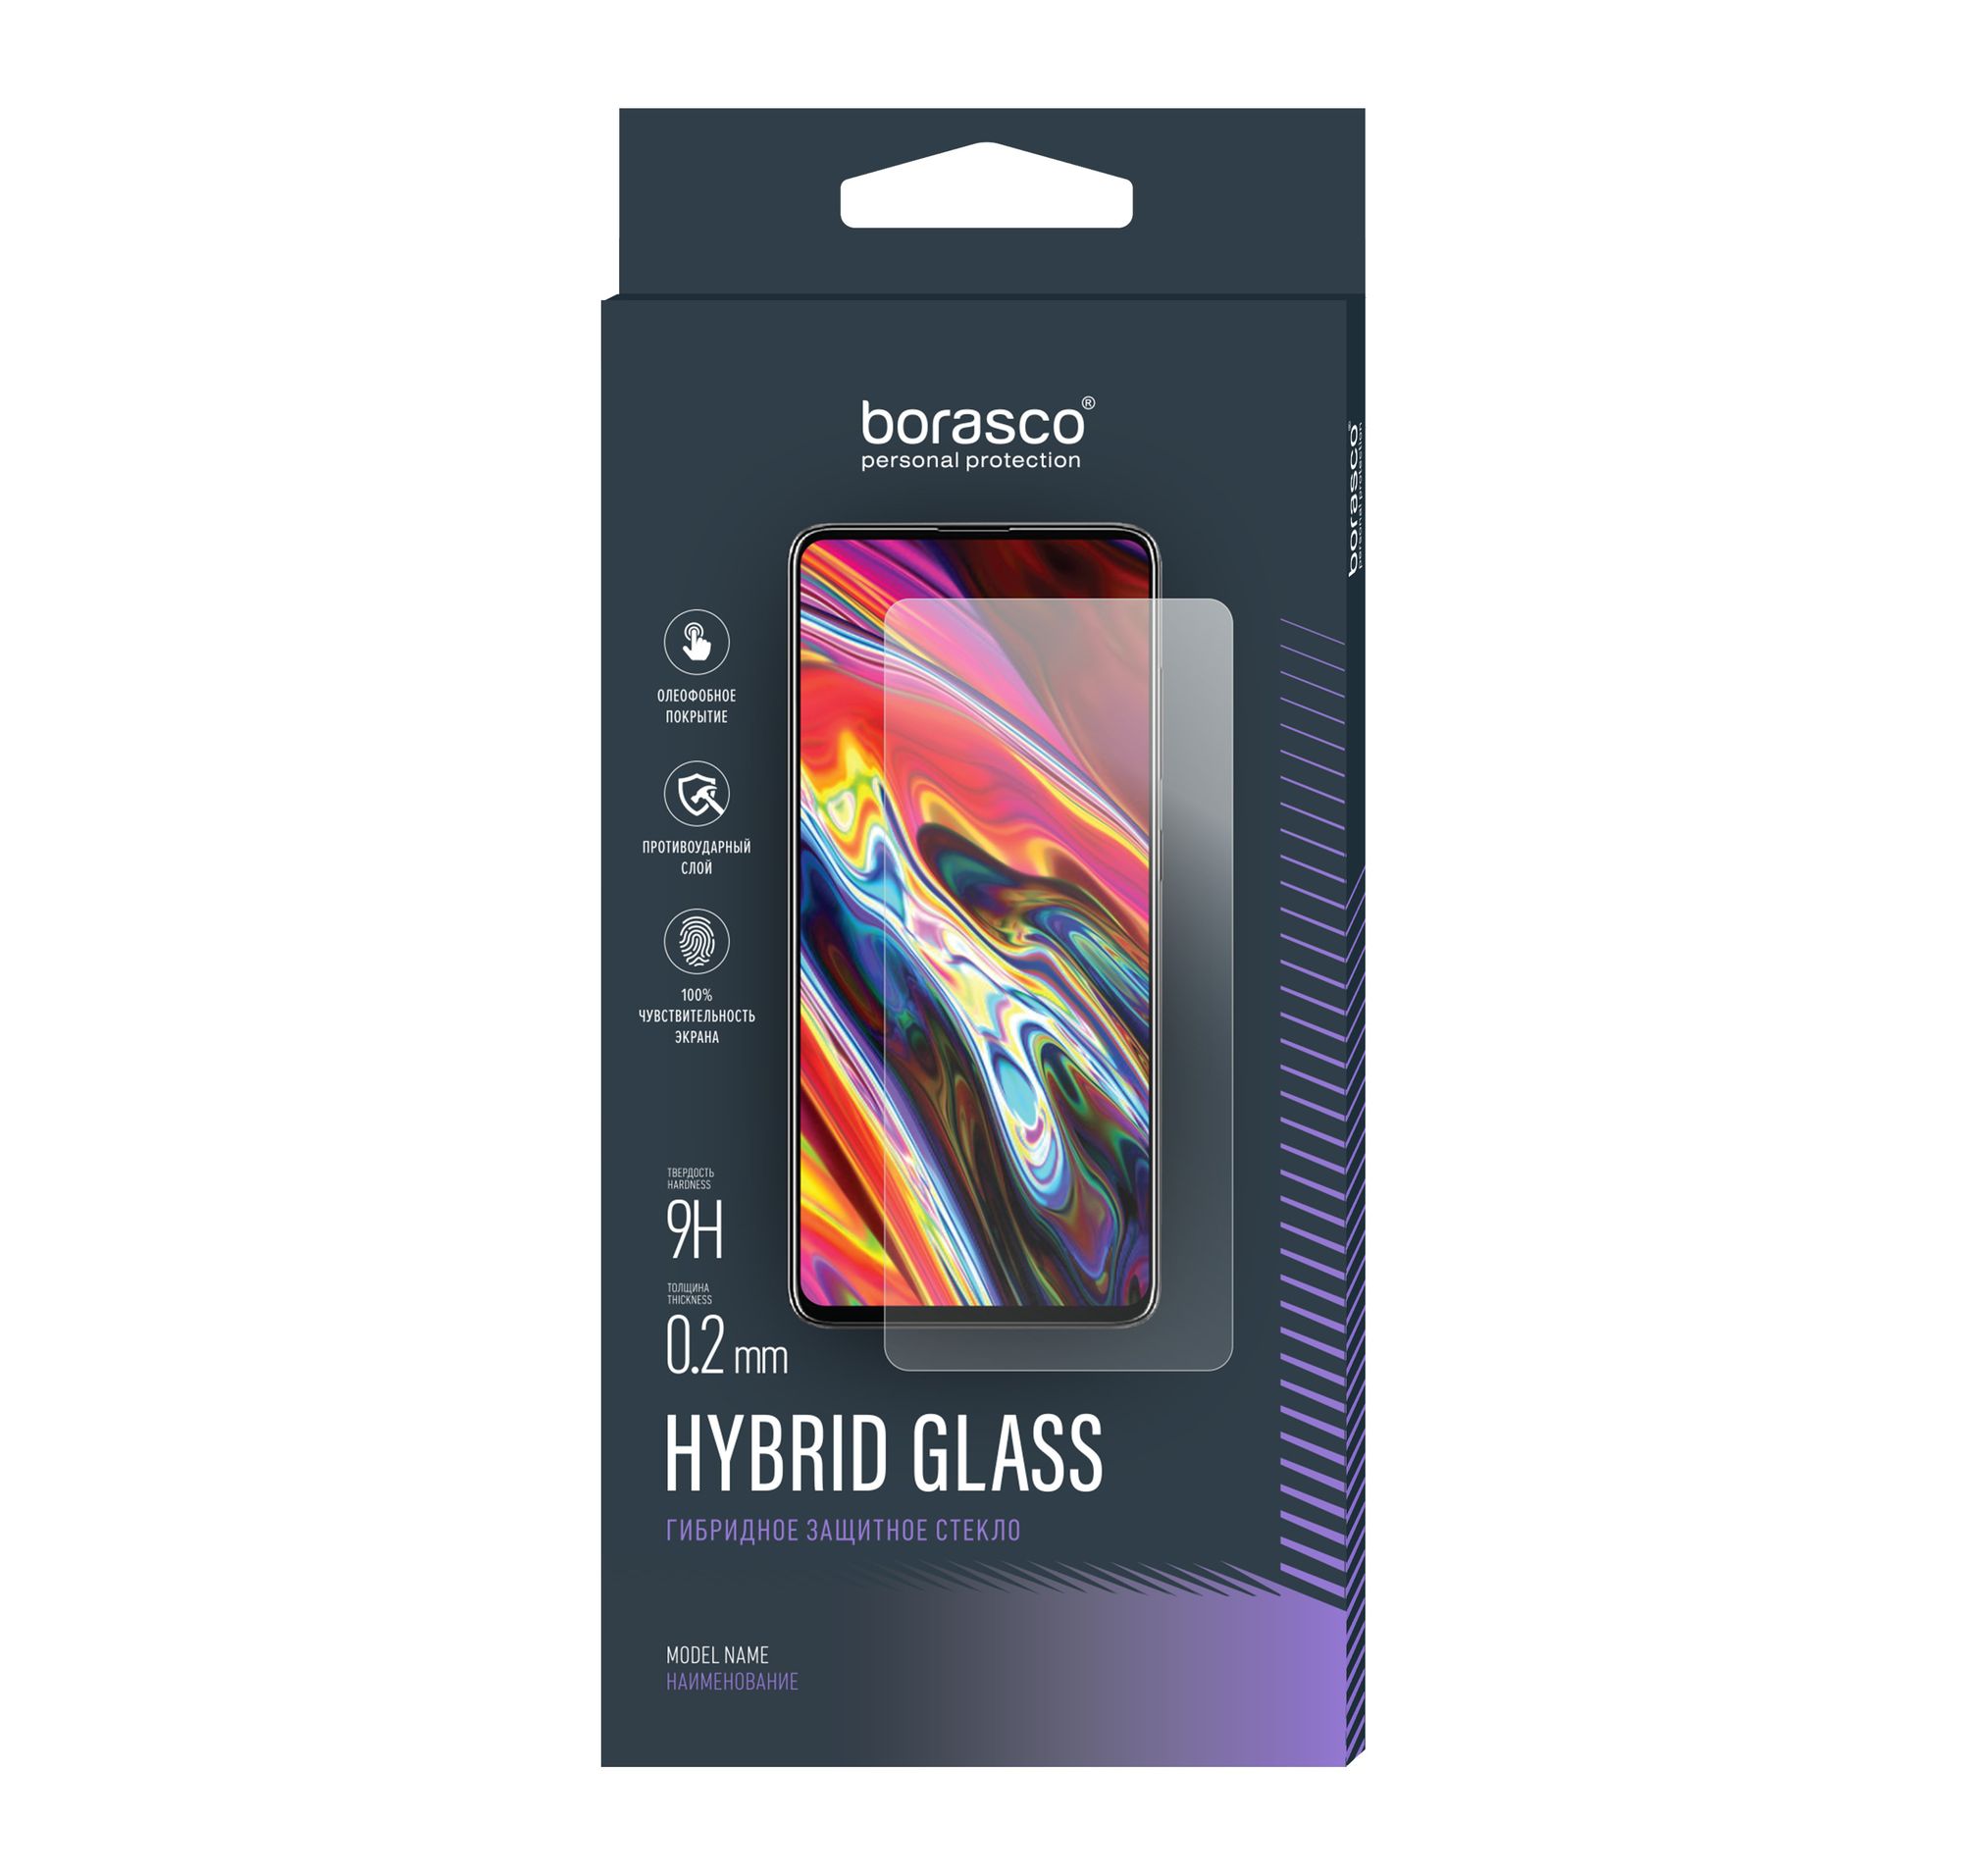 Стекло защитное Hybrid Glass VSP 0,26 мм для Asus Zenfone 5 ZE620KL цена и фото